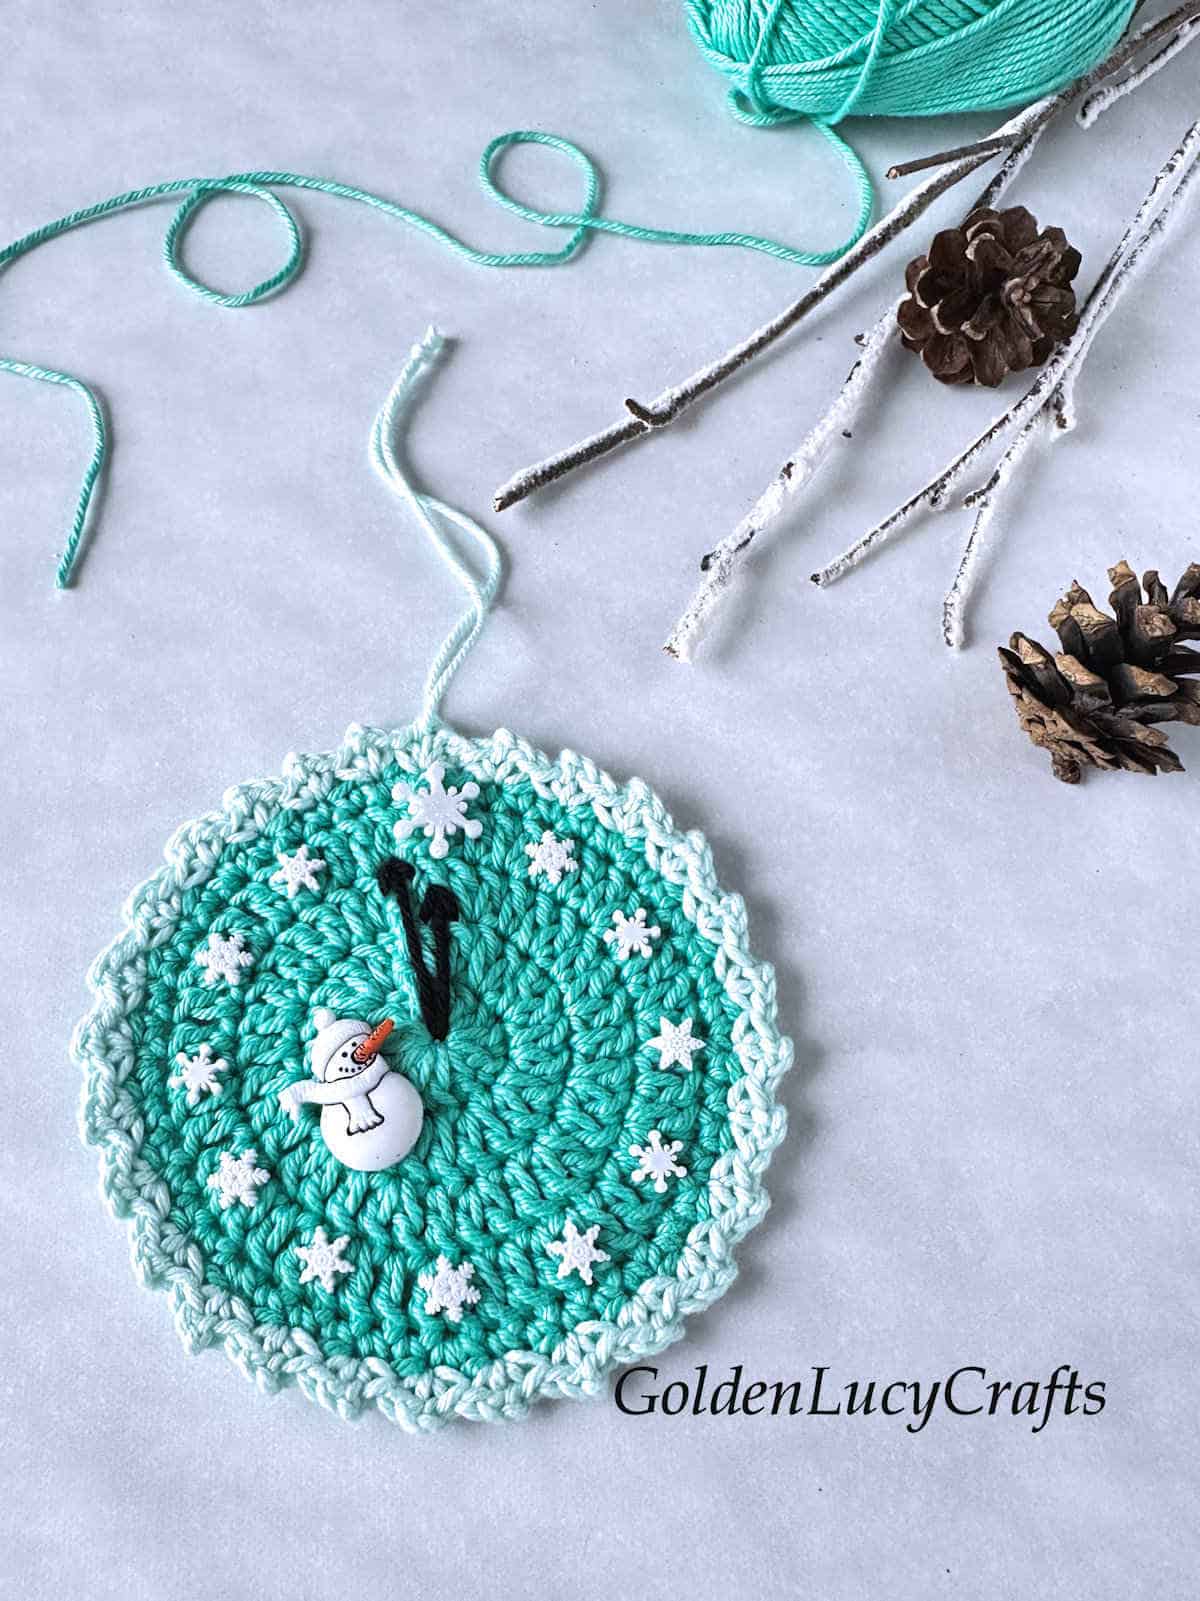 New Year clock crocheted ornament.